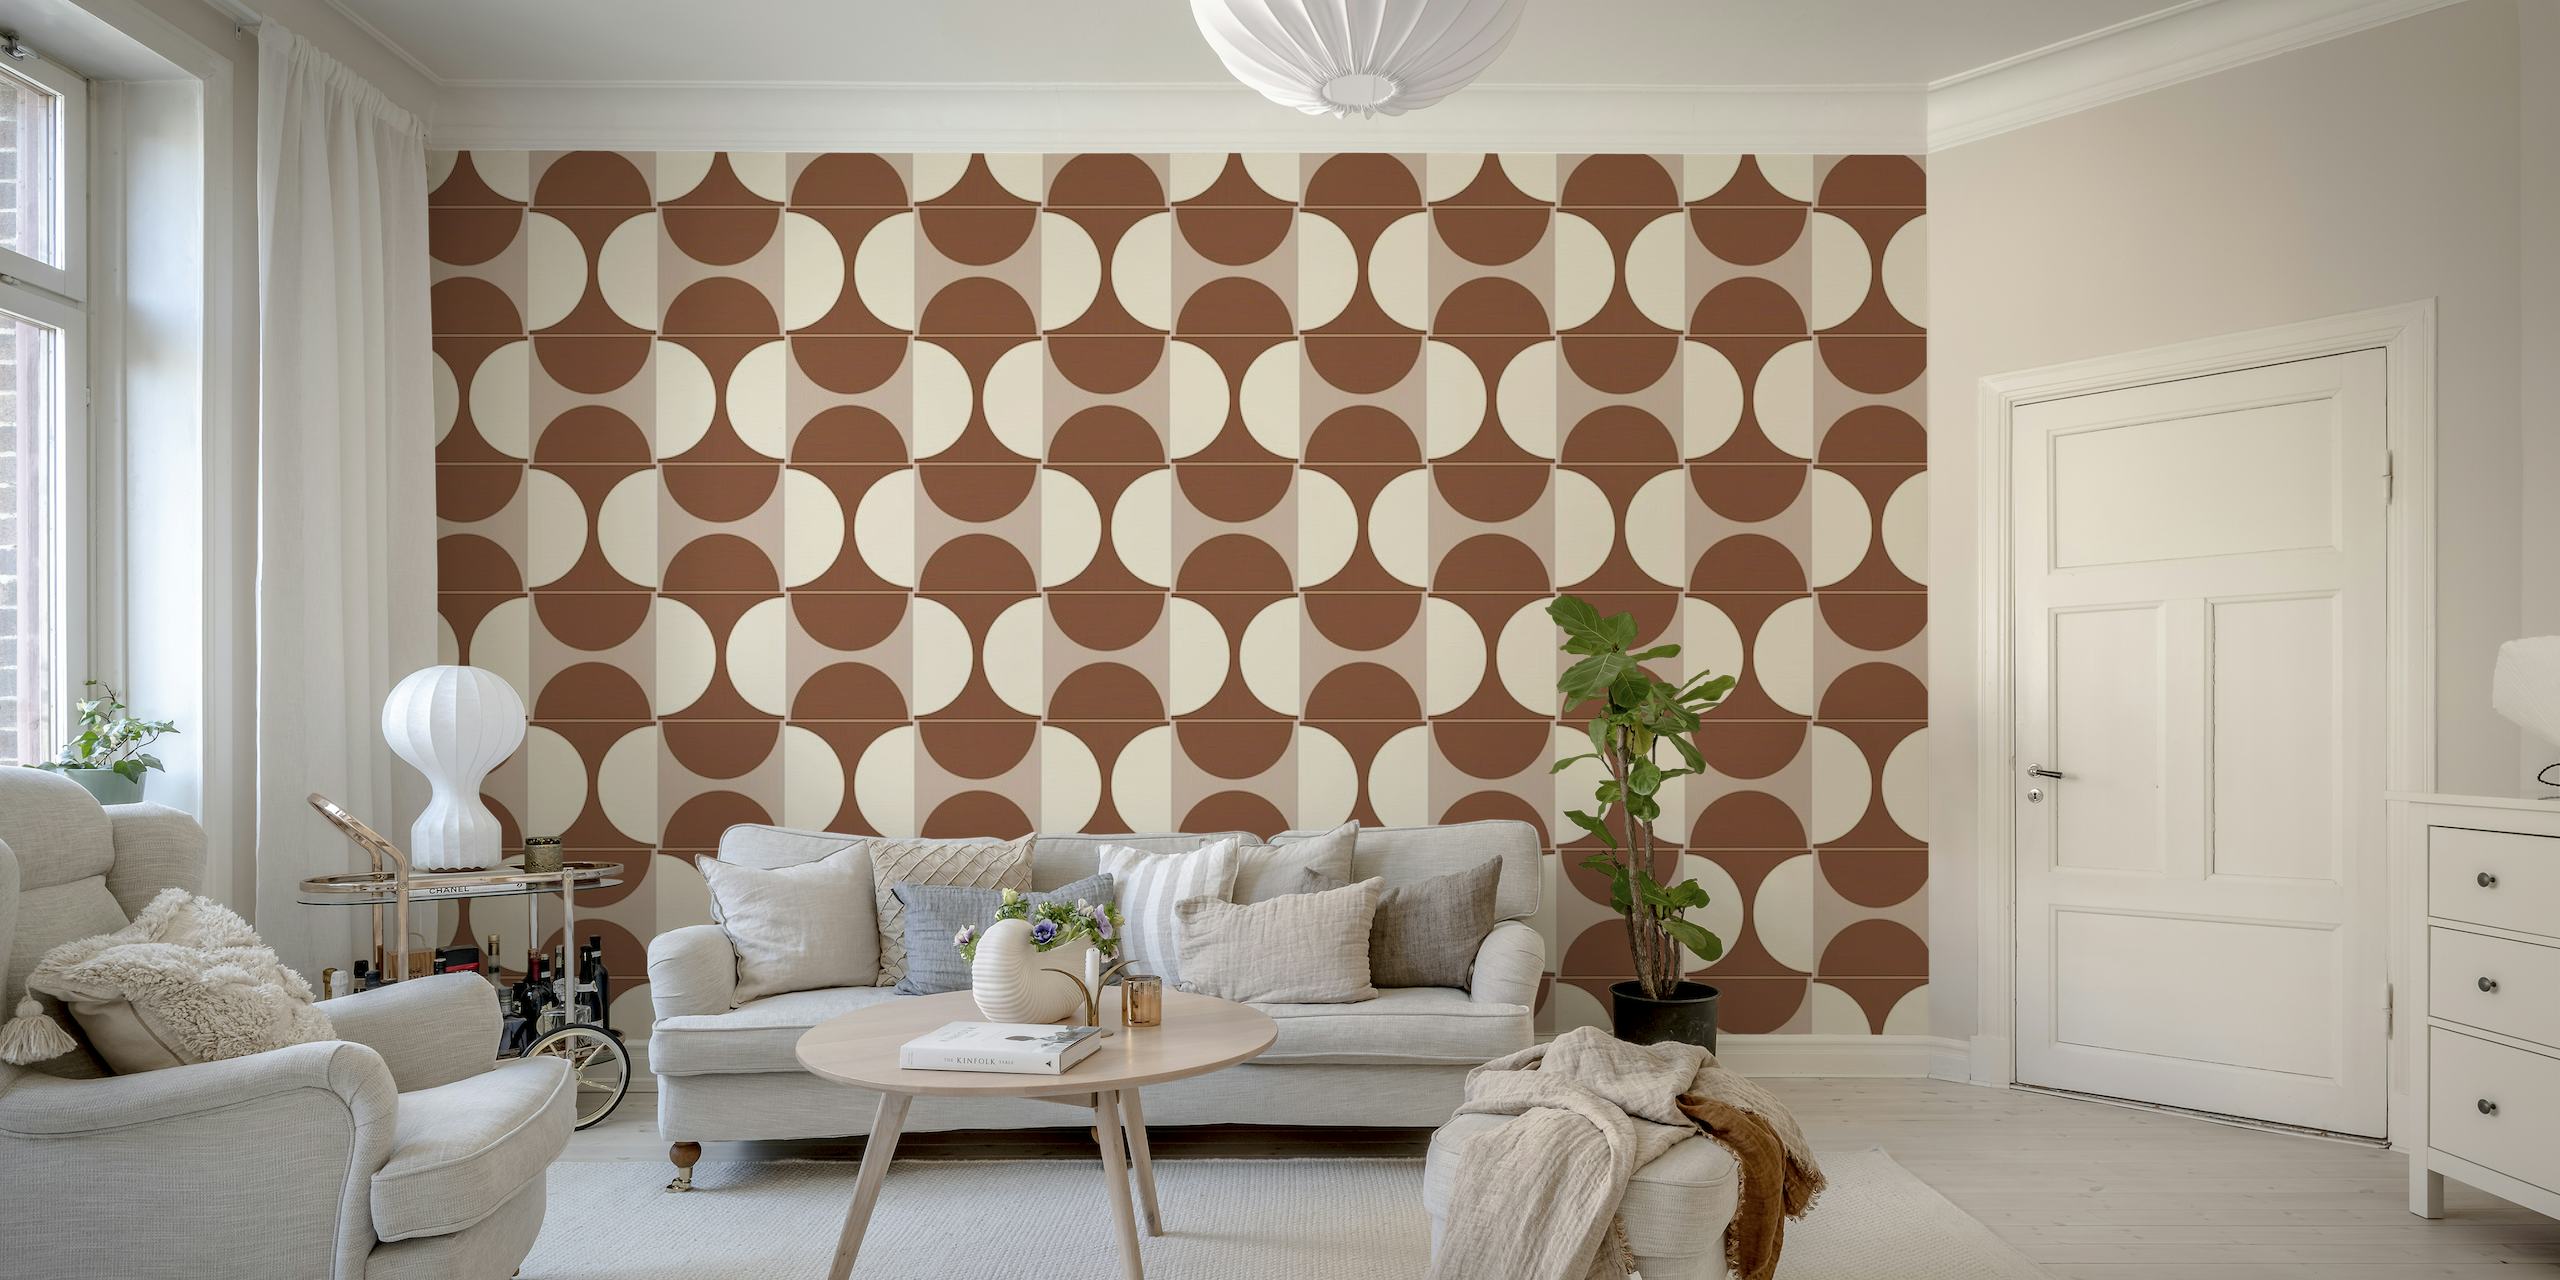 Cotto Tiles Cinnamon and Cream Combo papel de parede